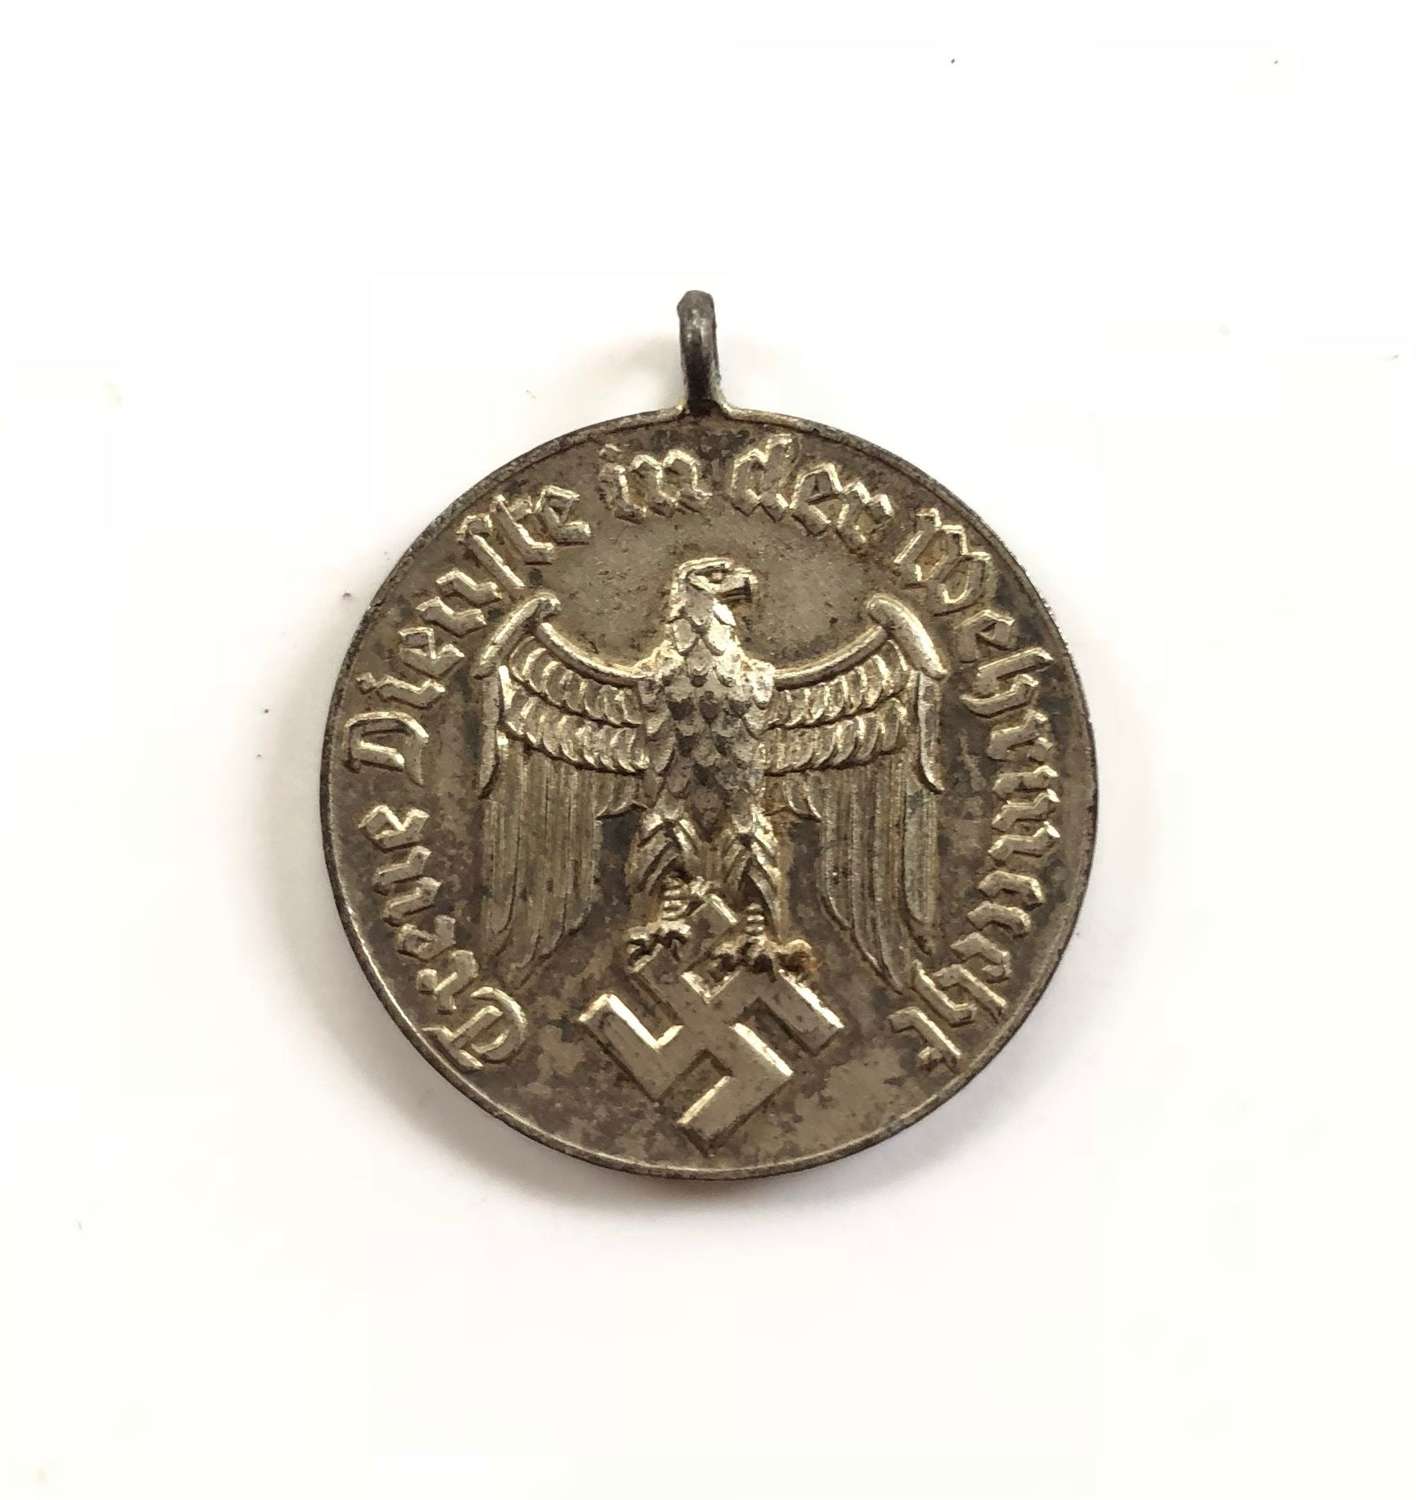 WW2 German 4 Year Service Medal.